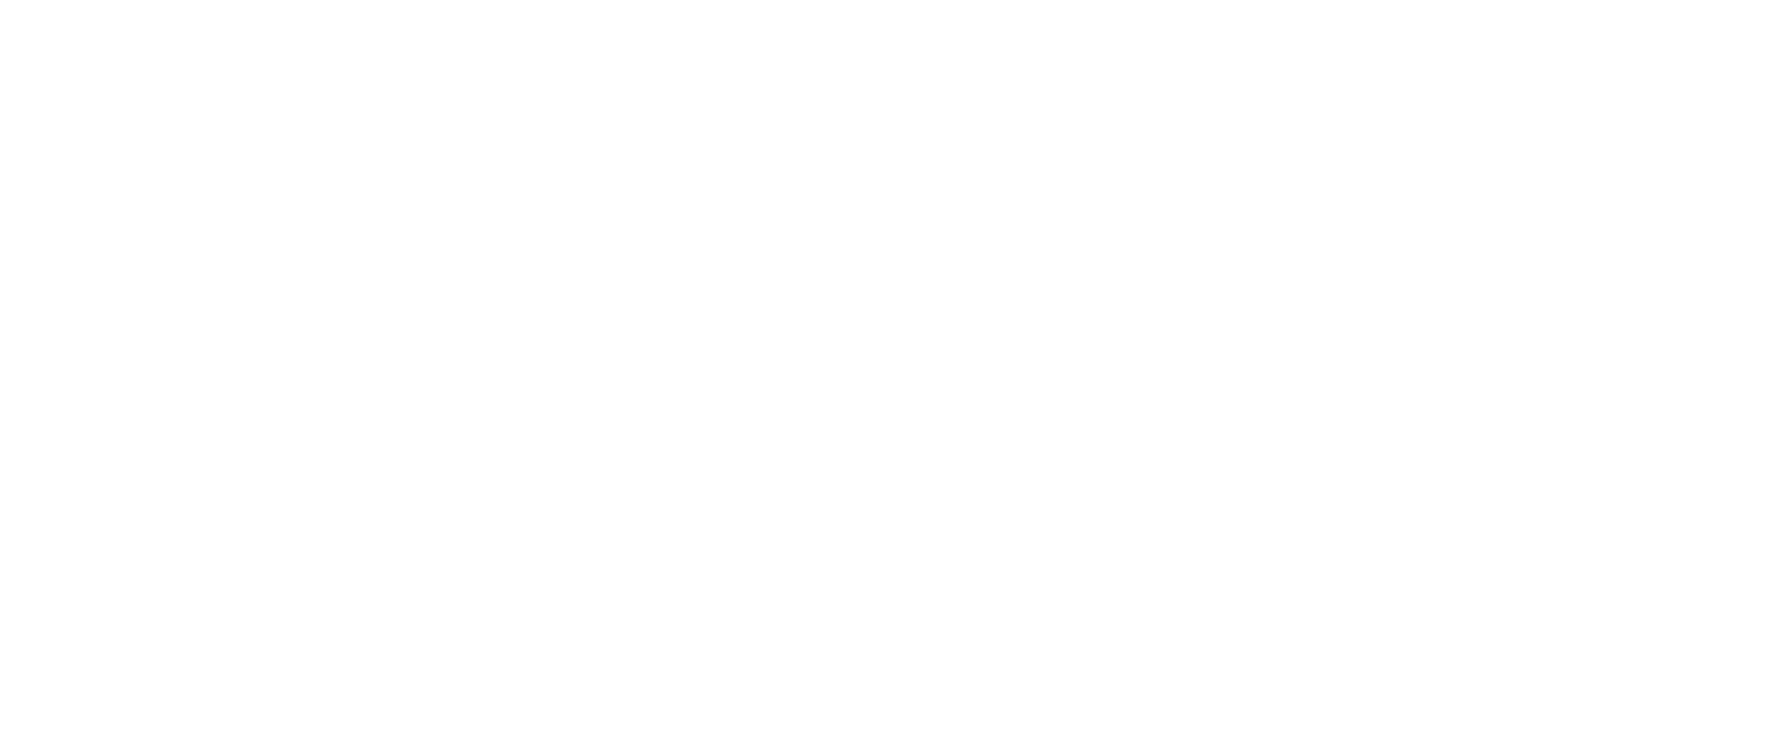 Nova Scotia Working Woodlands Trust